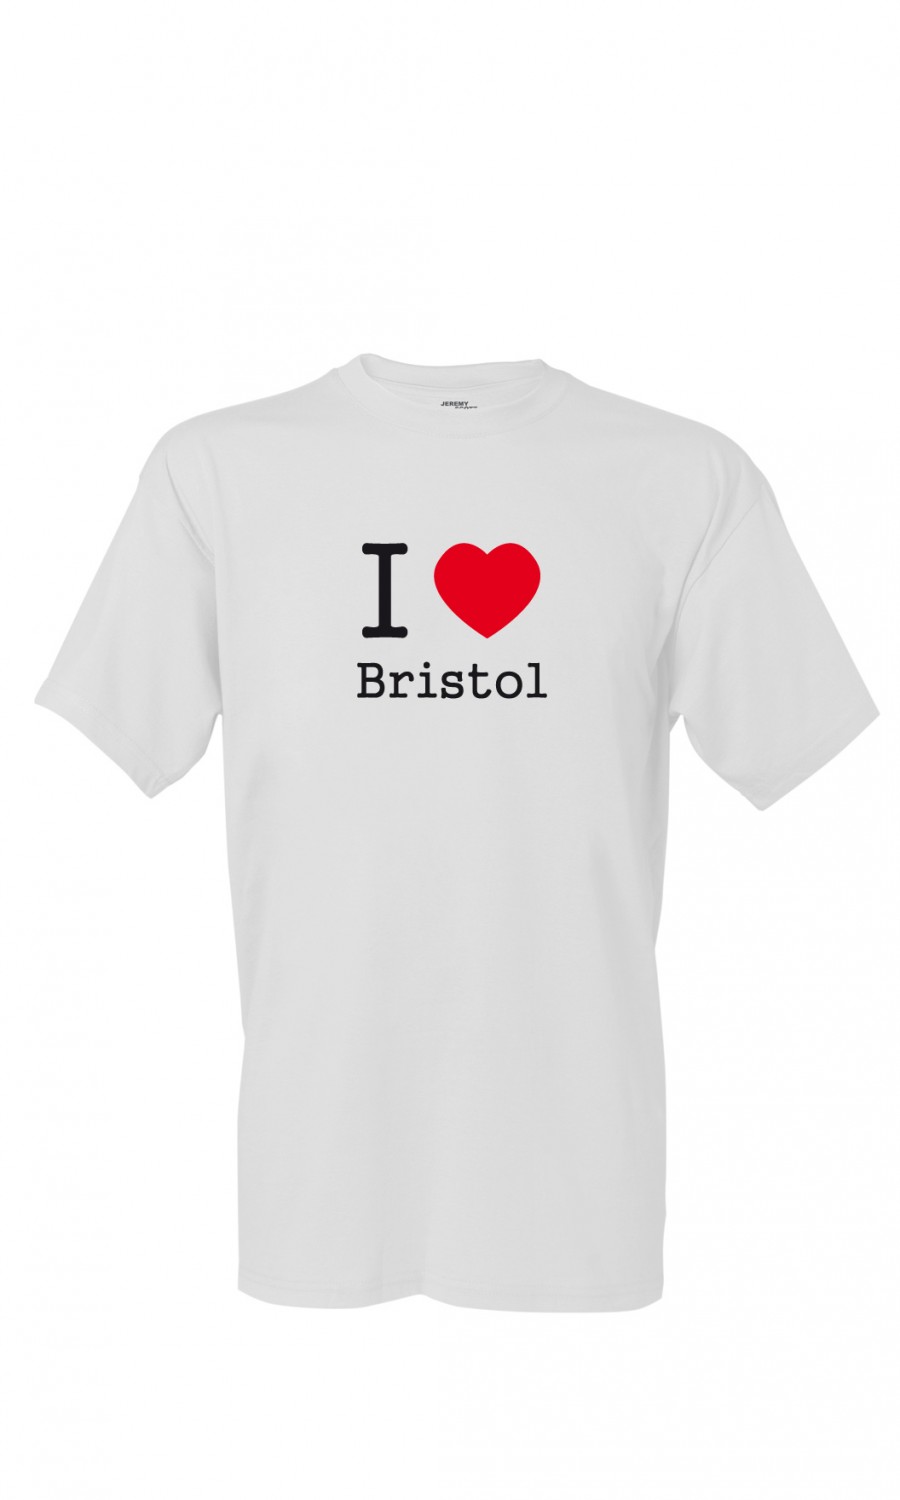 Bristol s